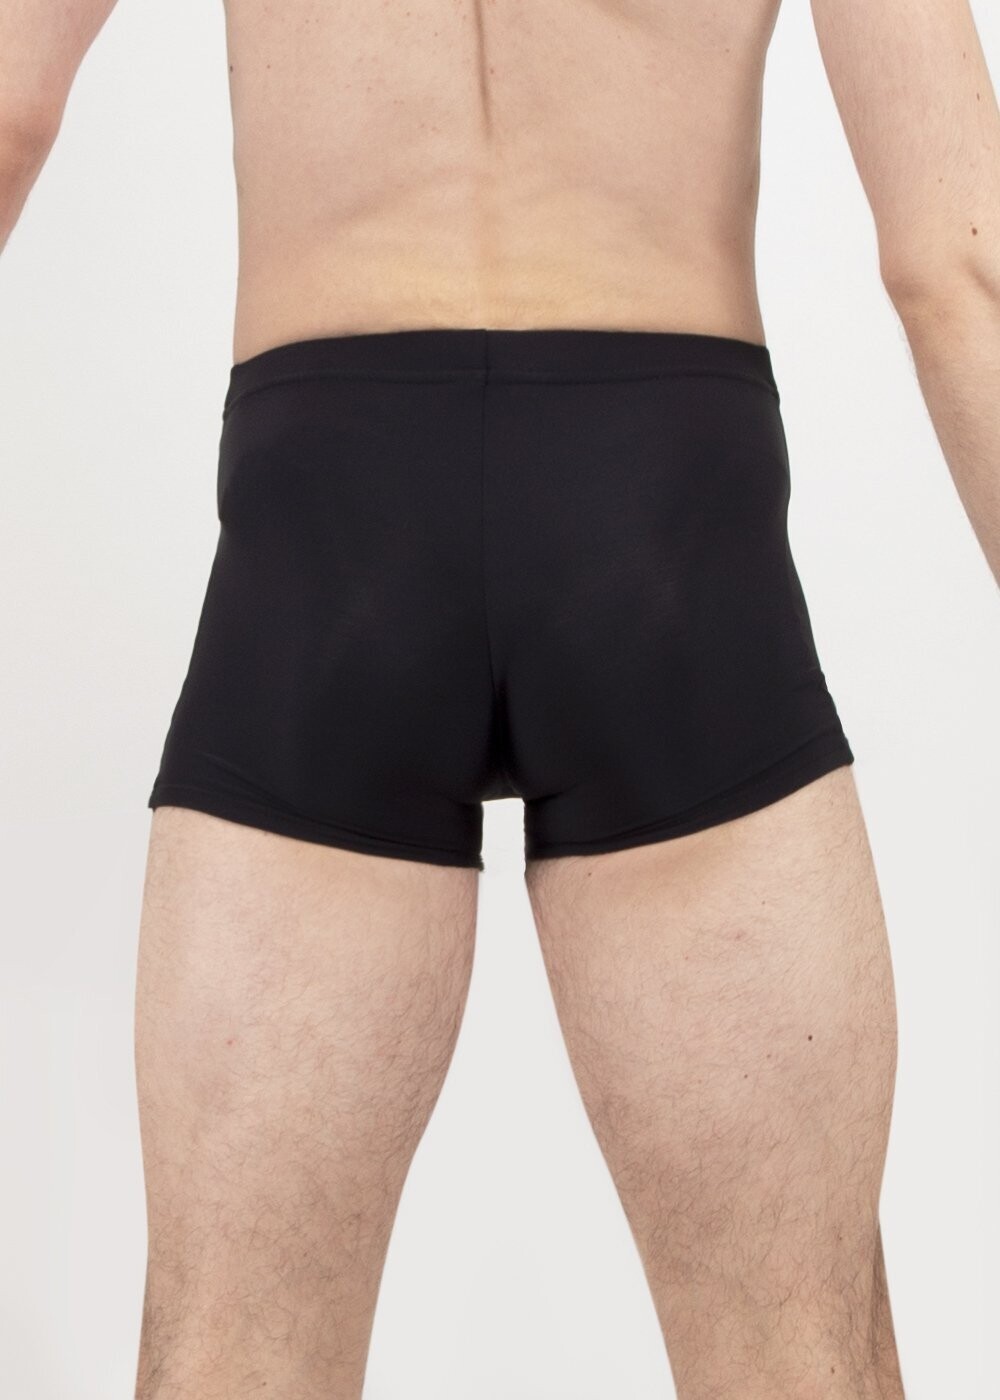 Shorts for Men Baumwolle